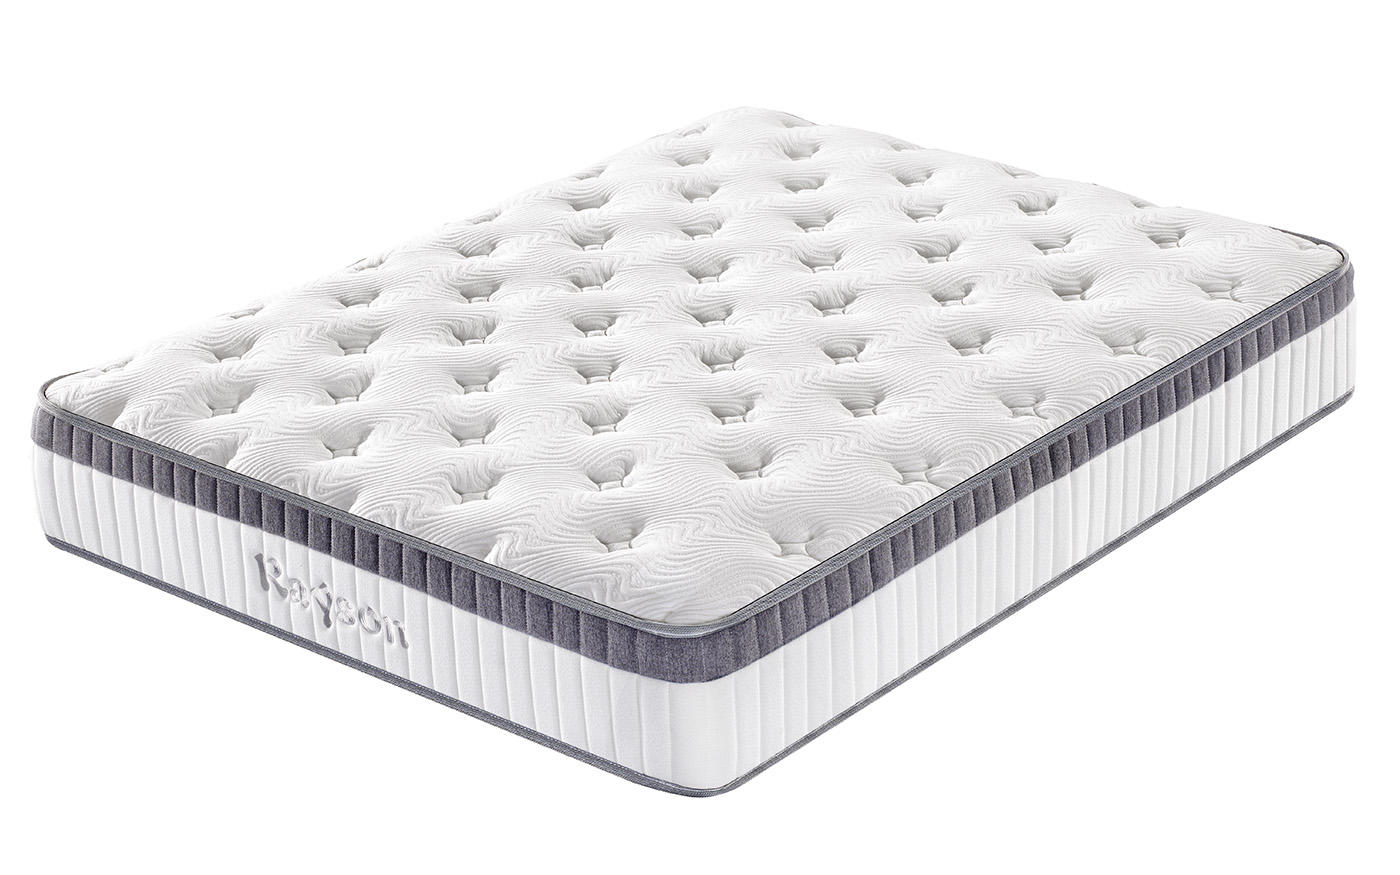 Wholesale Europe top 26cm pocket spring mattress sale online-1